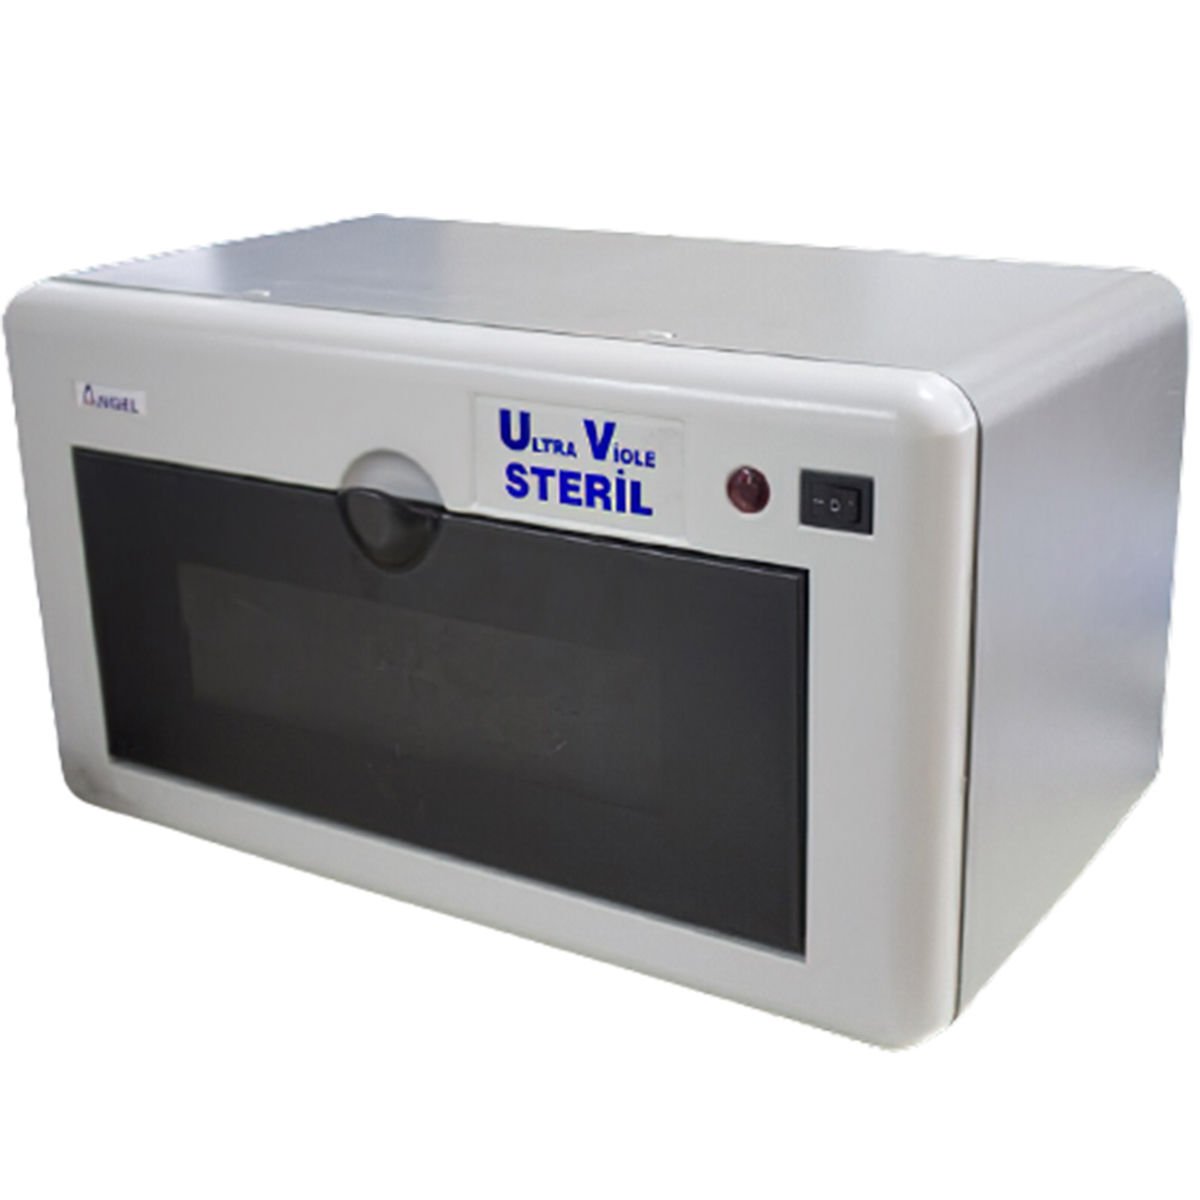 Ultraviole Steril Cihazı - UV Sterilizasyon